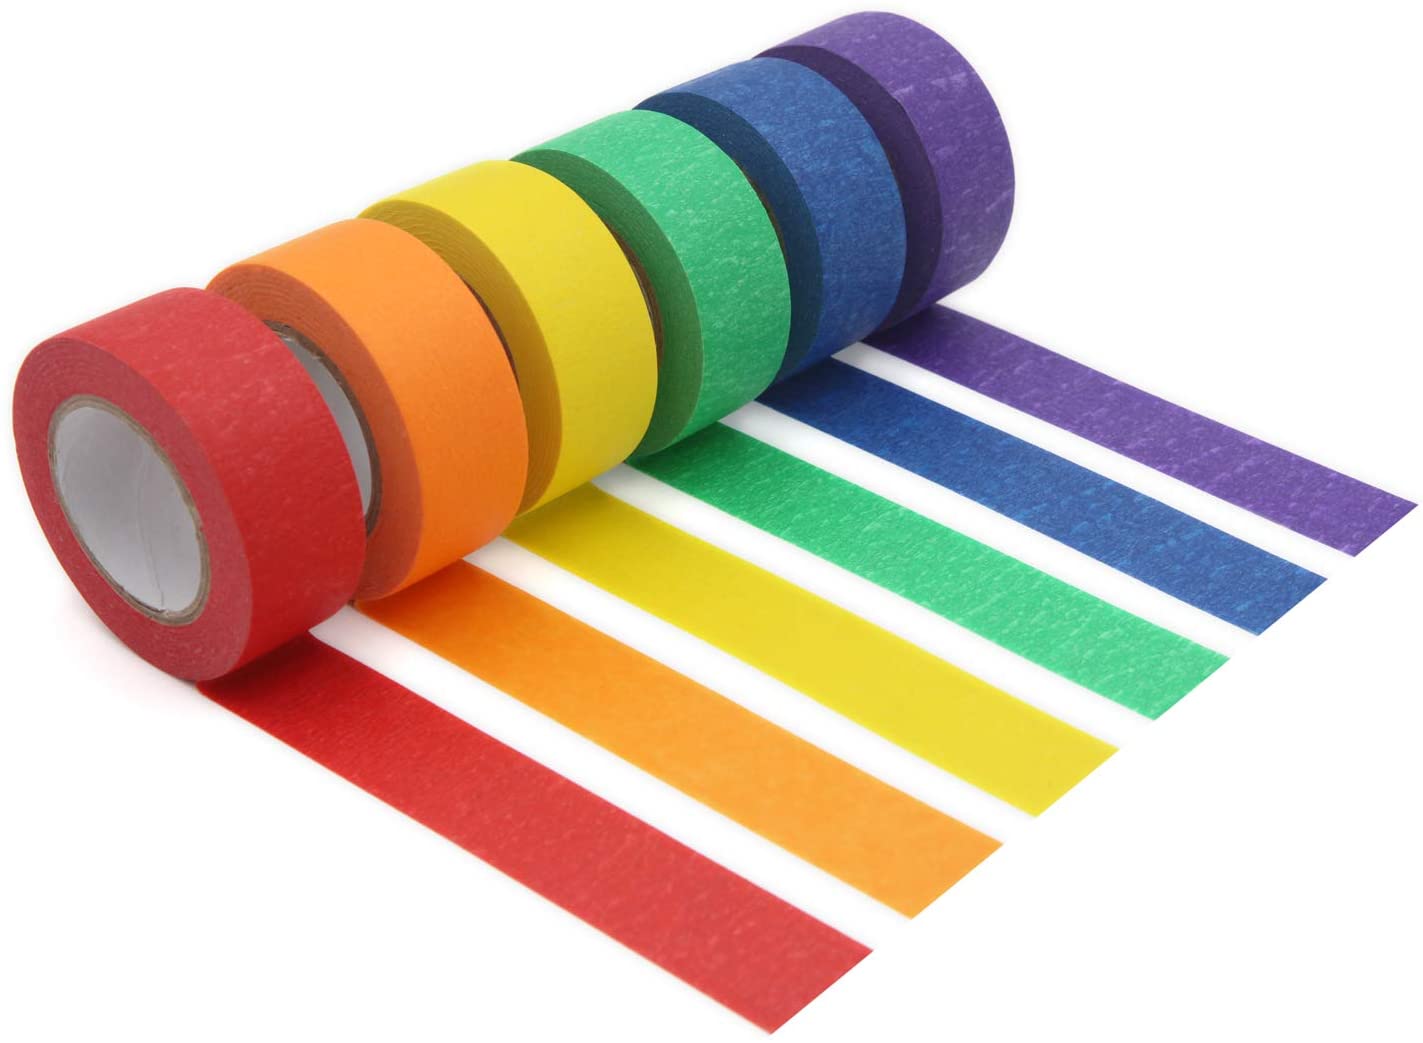 Feeke Multicolored Children’s Masking Tape, 6-Pack